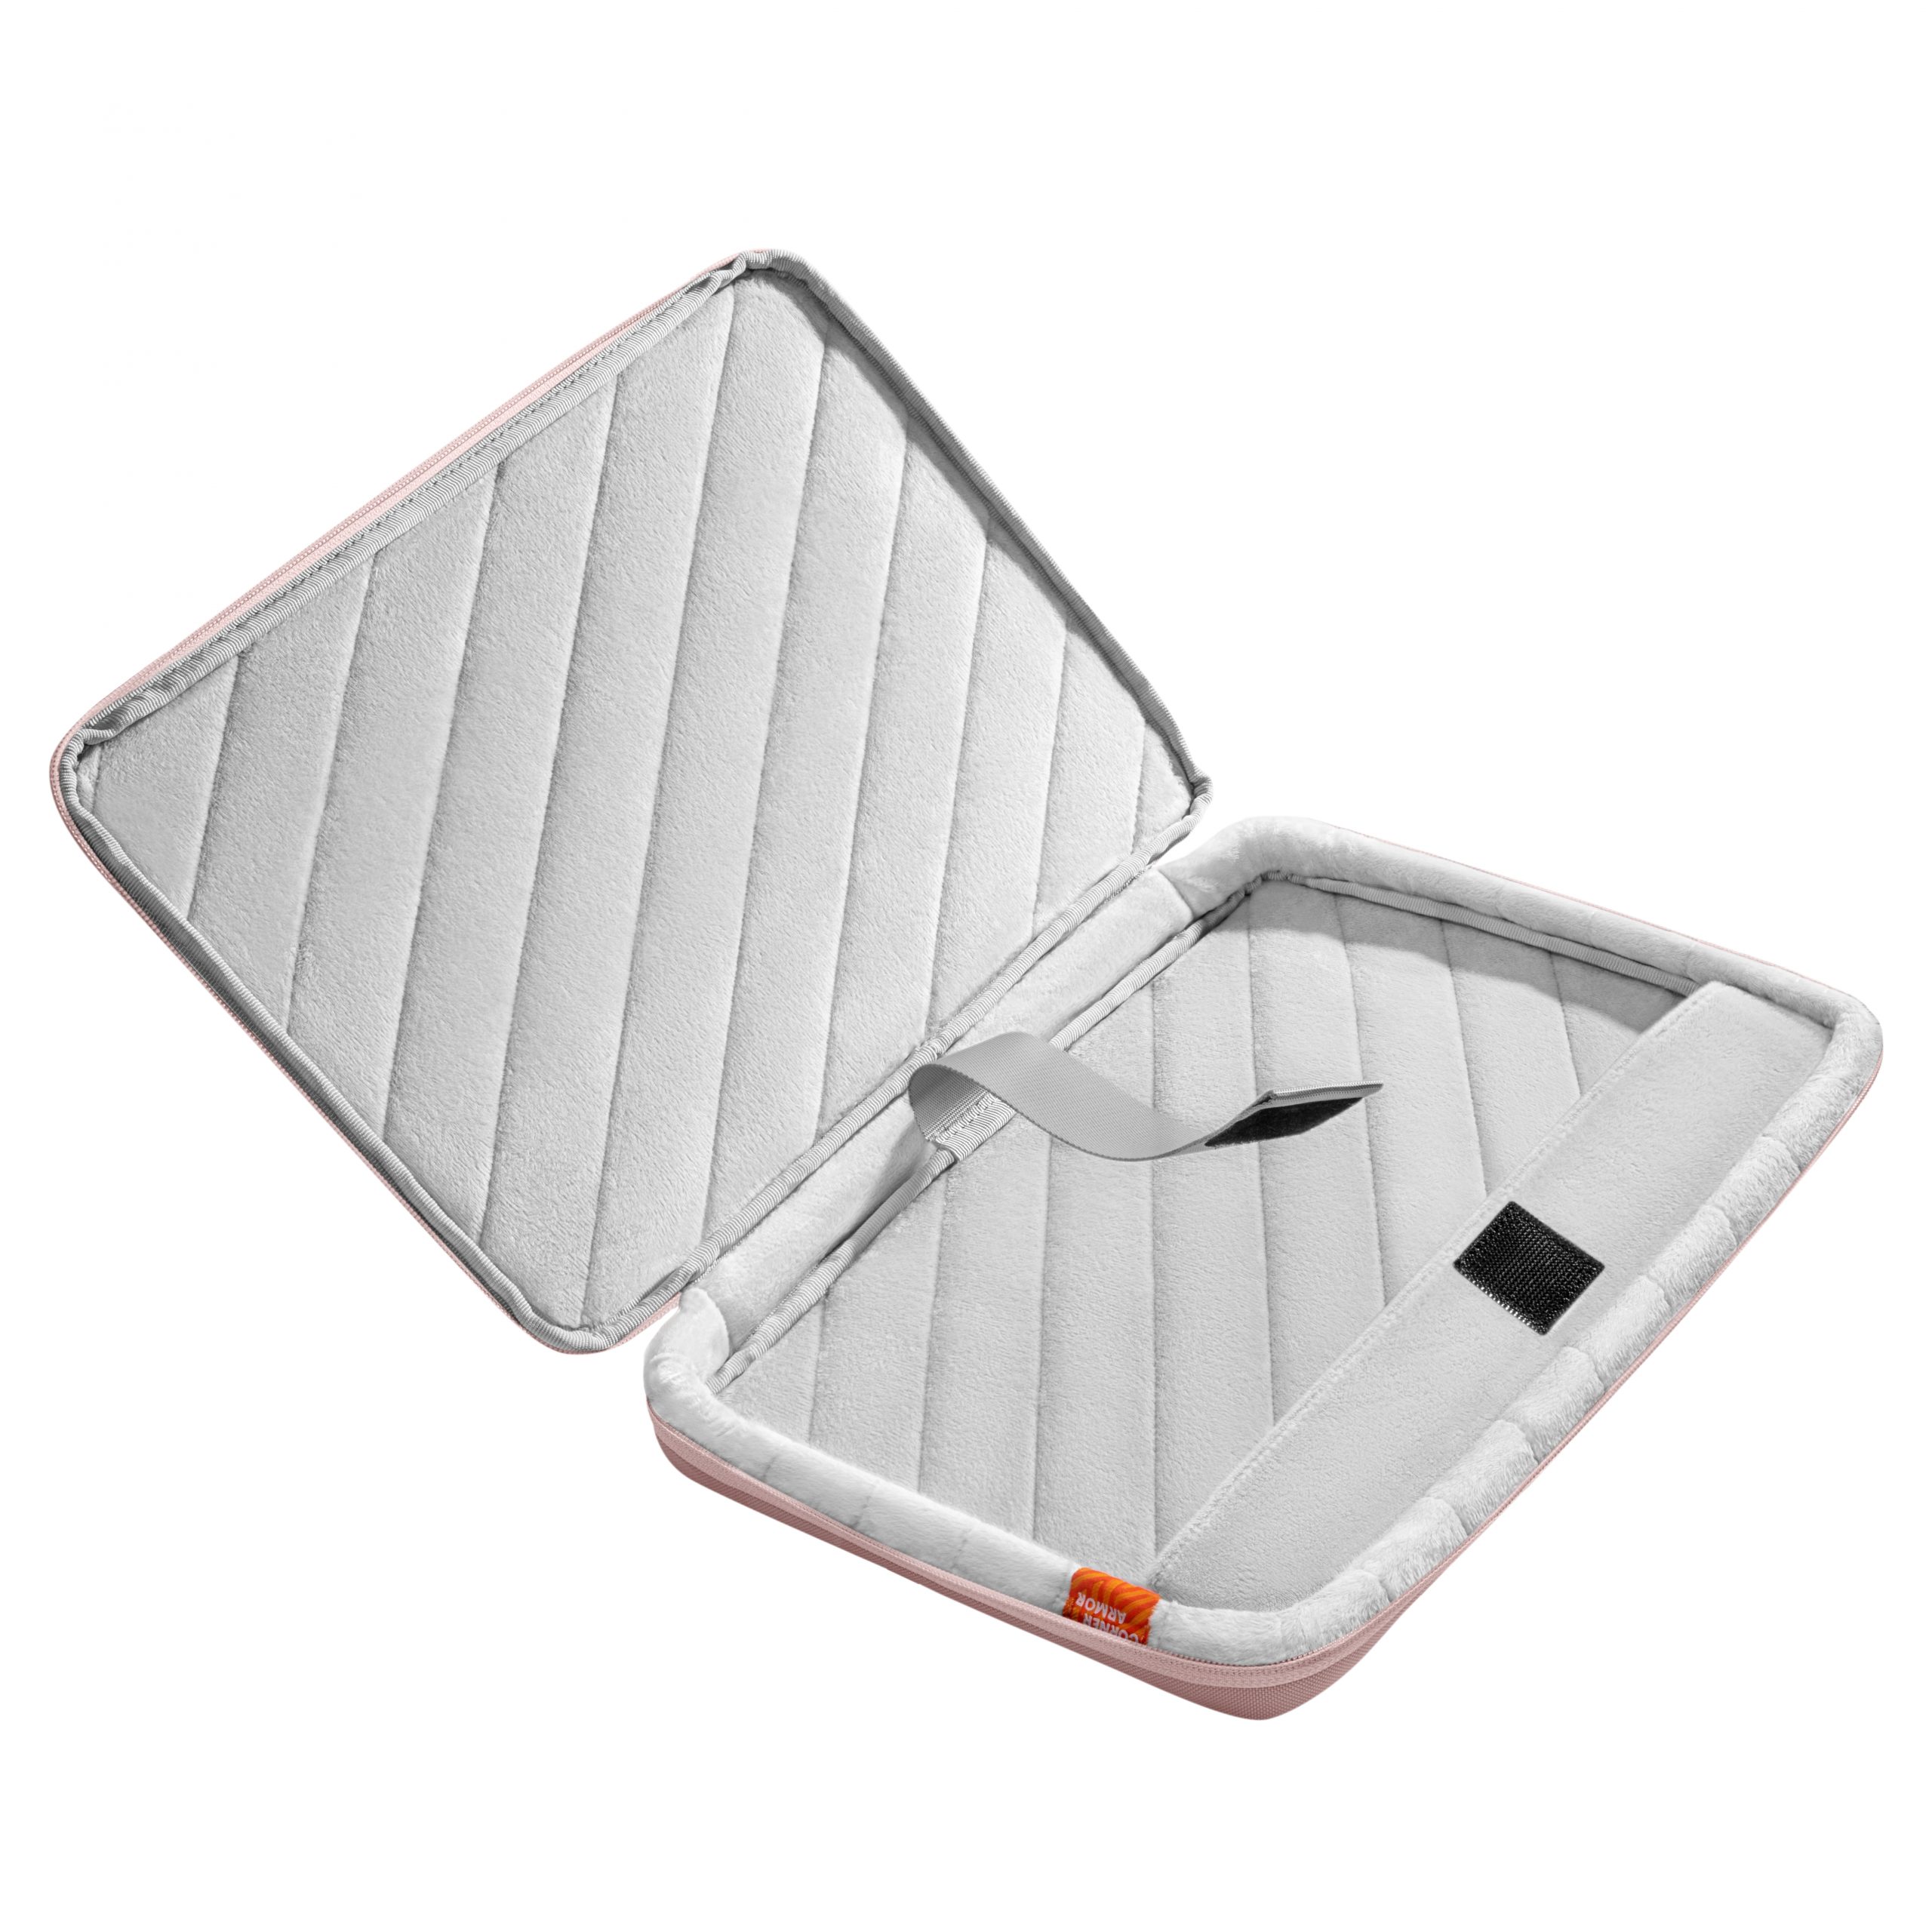 Túi Xách Chống Sốc Cho Macbook Pro 14” Tomtoc Spill-Resistant - Pink ( A22D2P1)